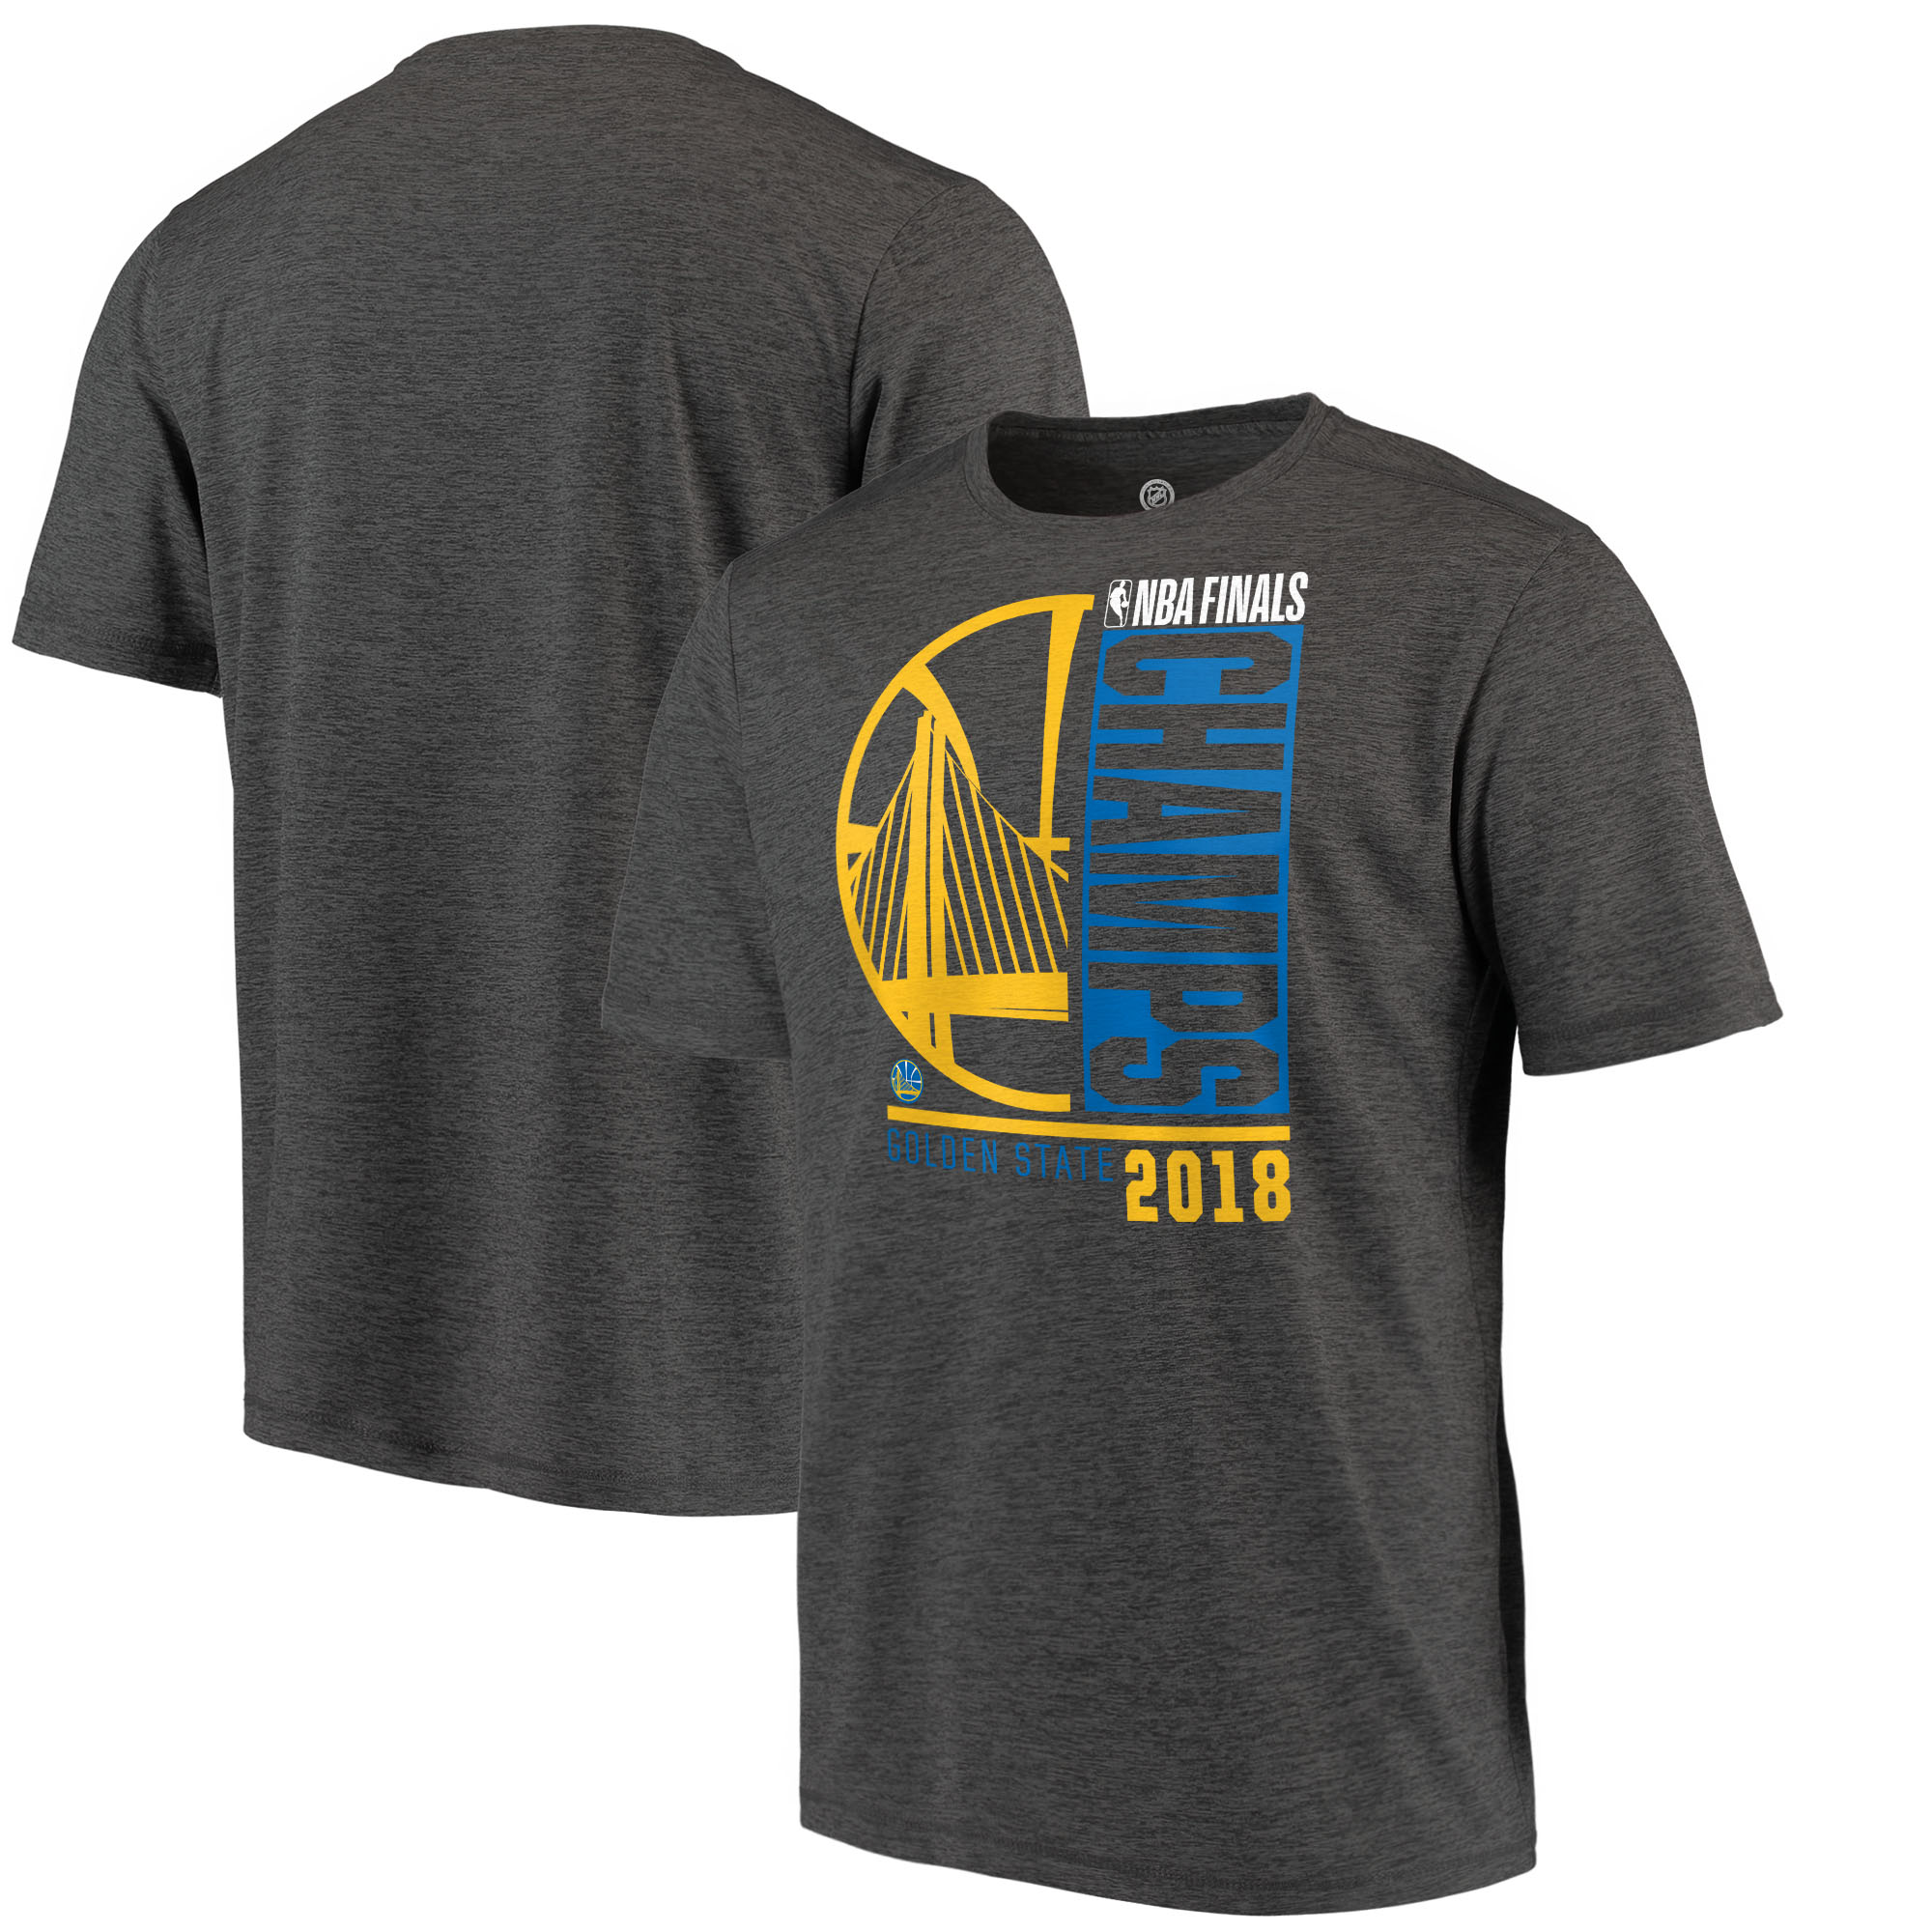 Golden State Warriors Fanatics Branded 2018 NBA Finals Champions Performance T-Shirt Heather Charcoal